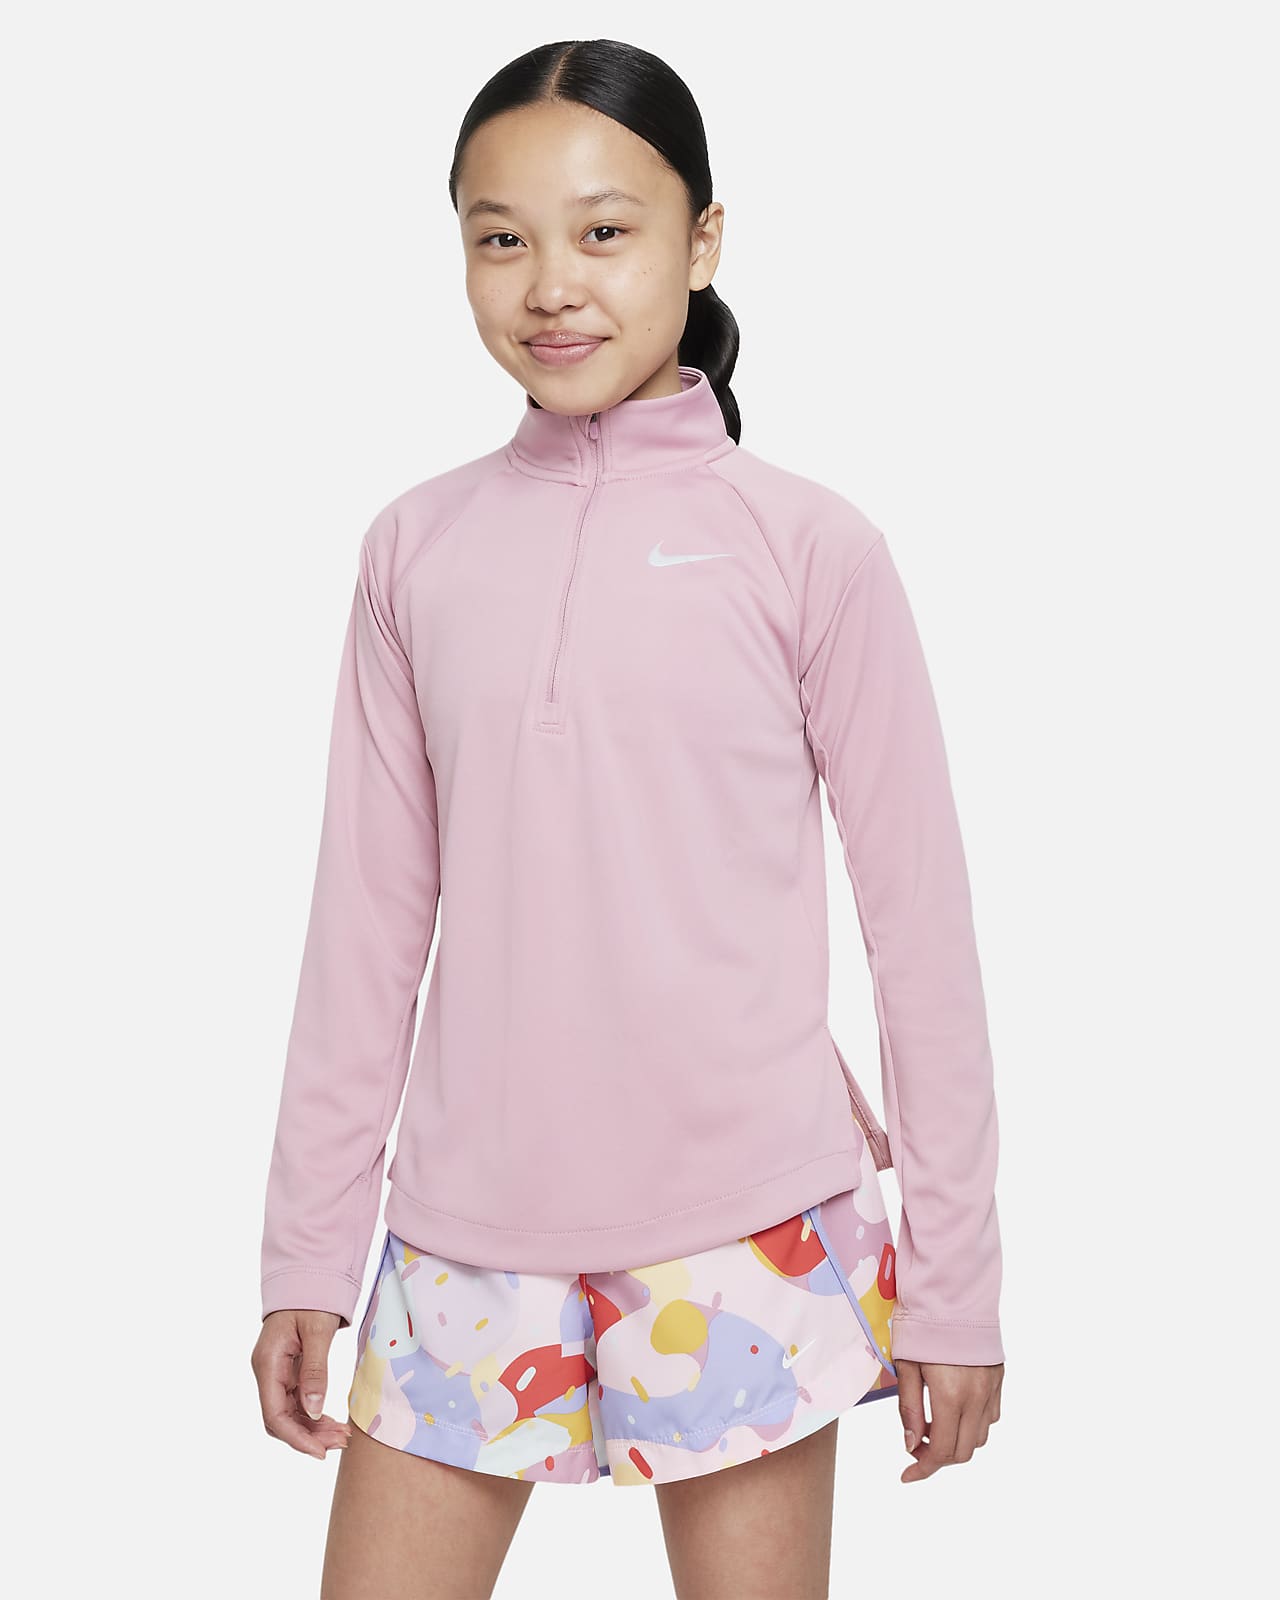 Nike Dri-FIT Older Kids' (Girls') Long-Sleeve Running Top